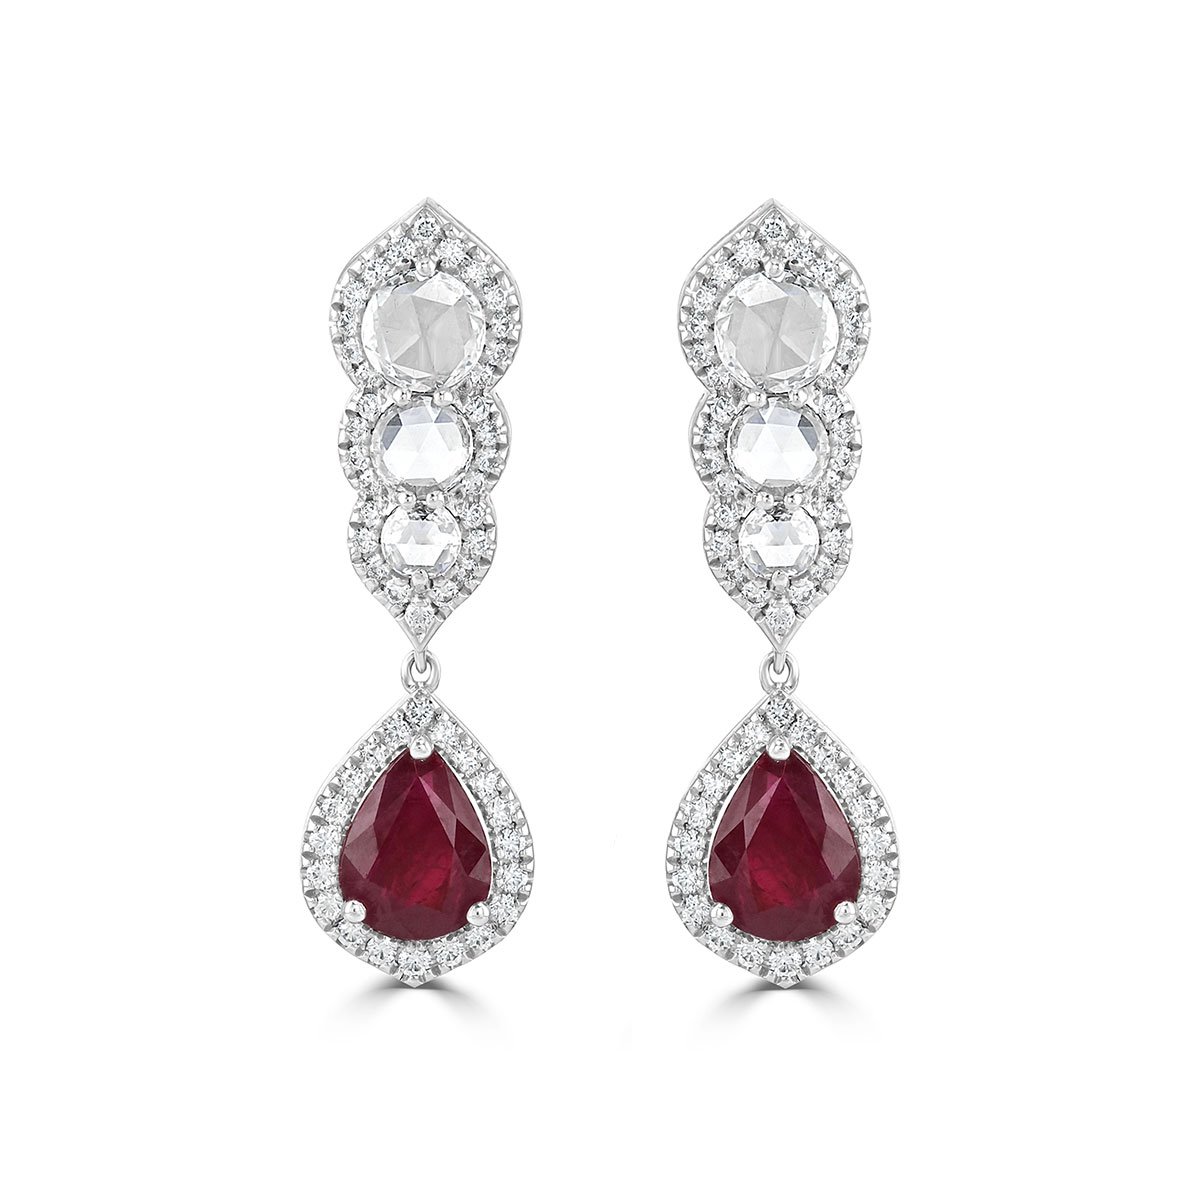 White Gold Pear Shape Ruby and Diamond Earrings